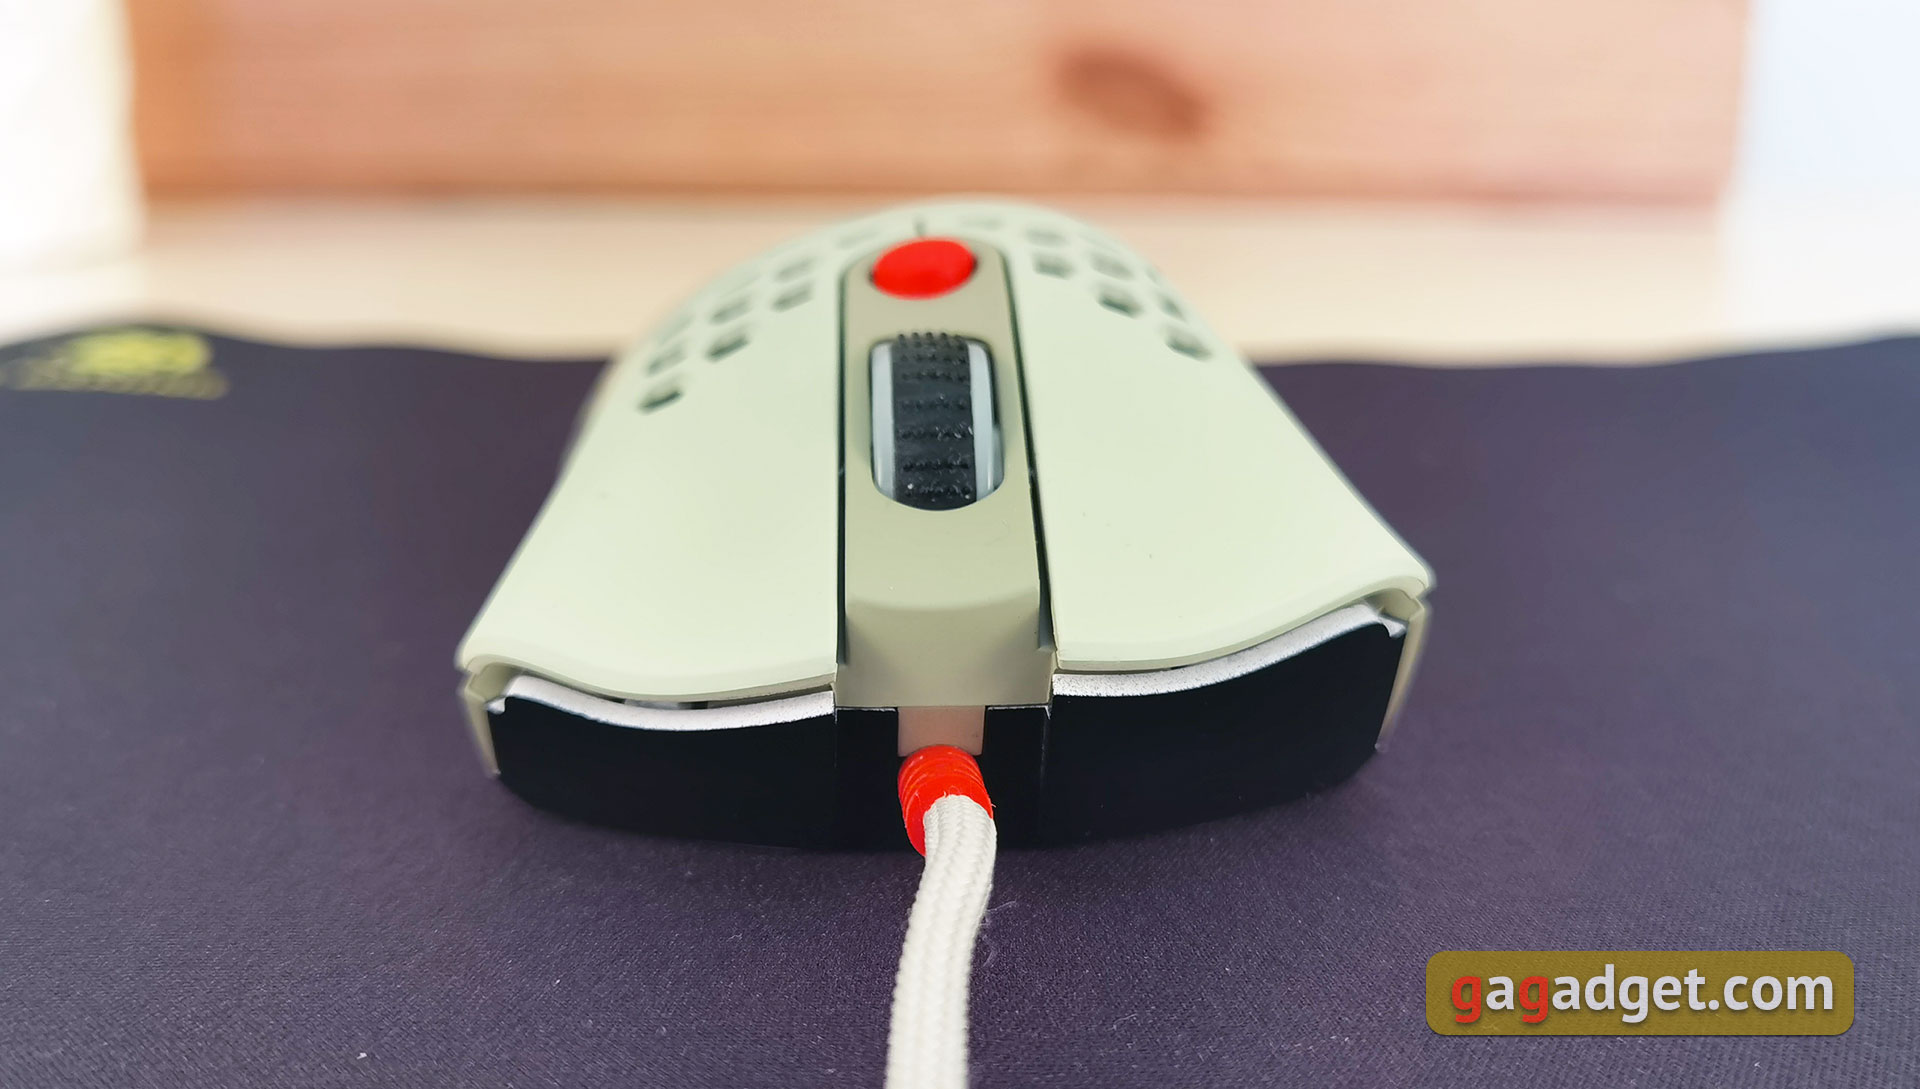 2E Gaming HyperSpeed Pro - przegląd: Lekka mysz do gier z doskonałym sensorem-13